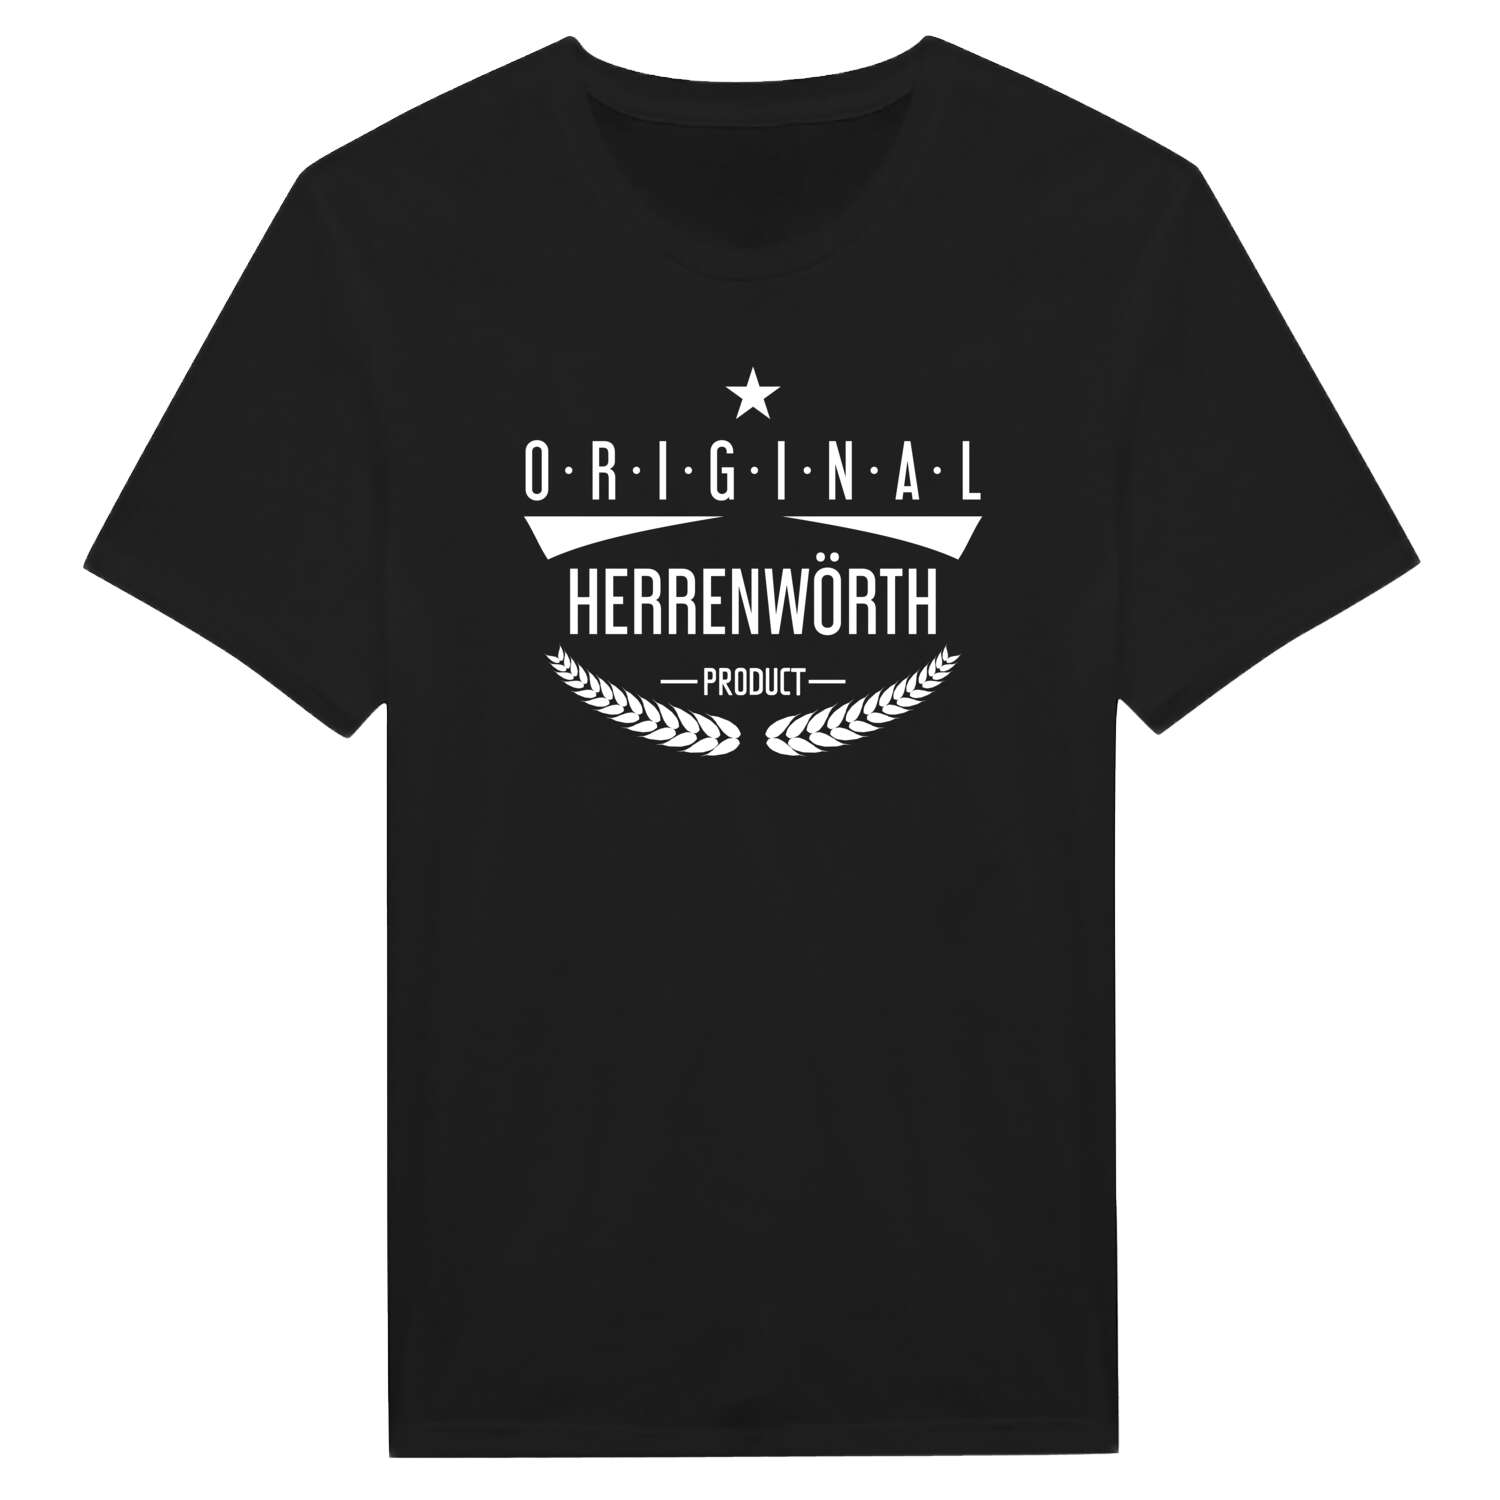 Herrenwörth T-Shirt »Original Product«